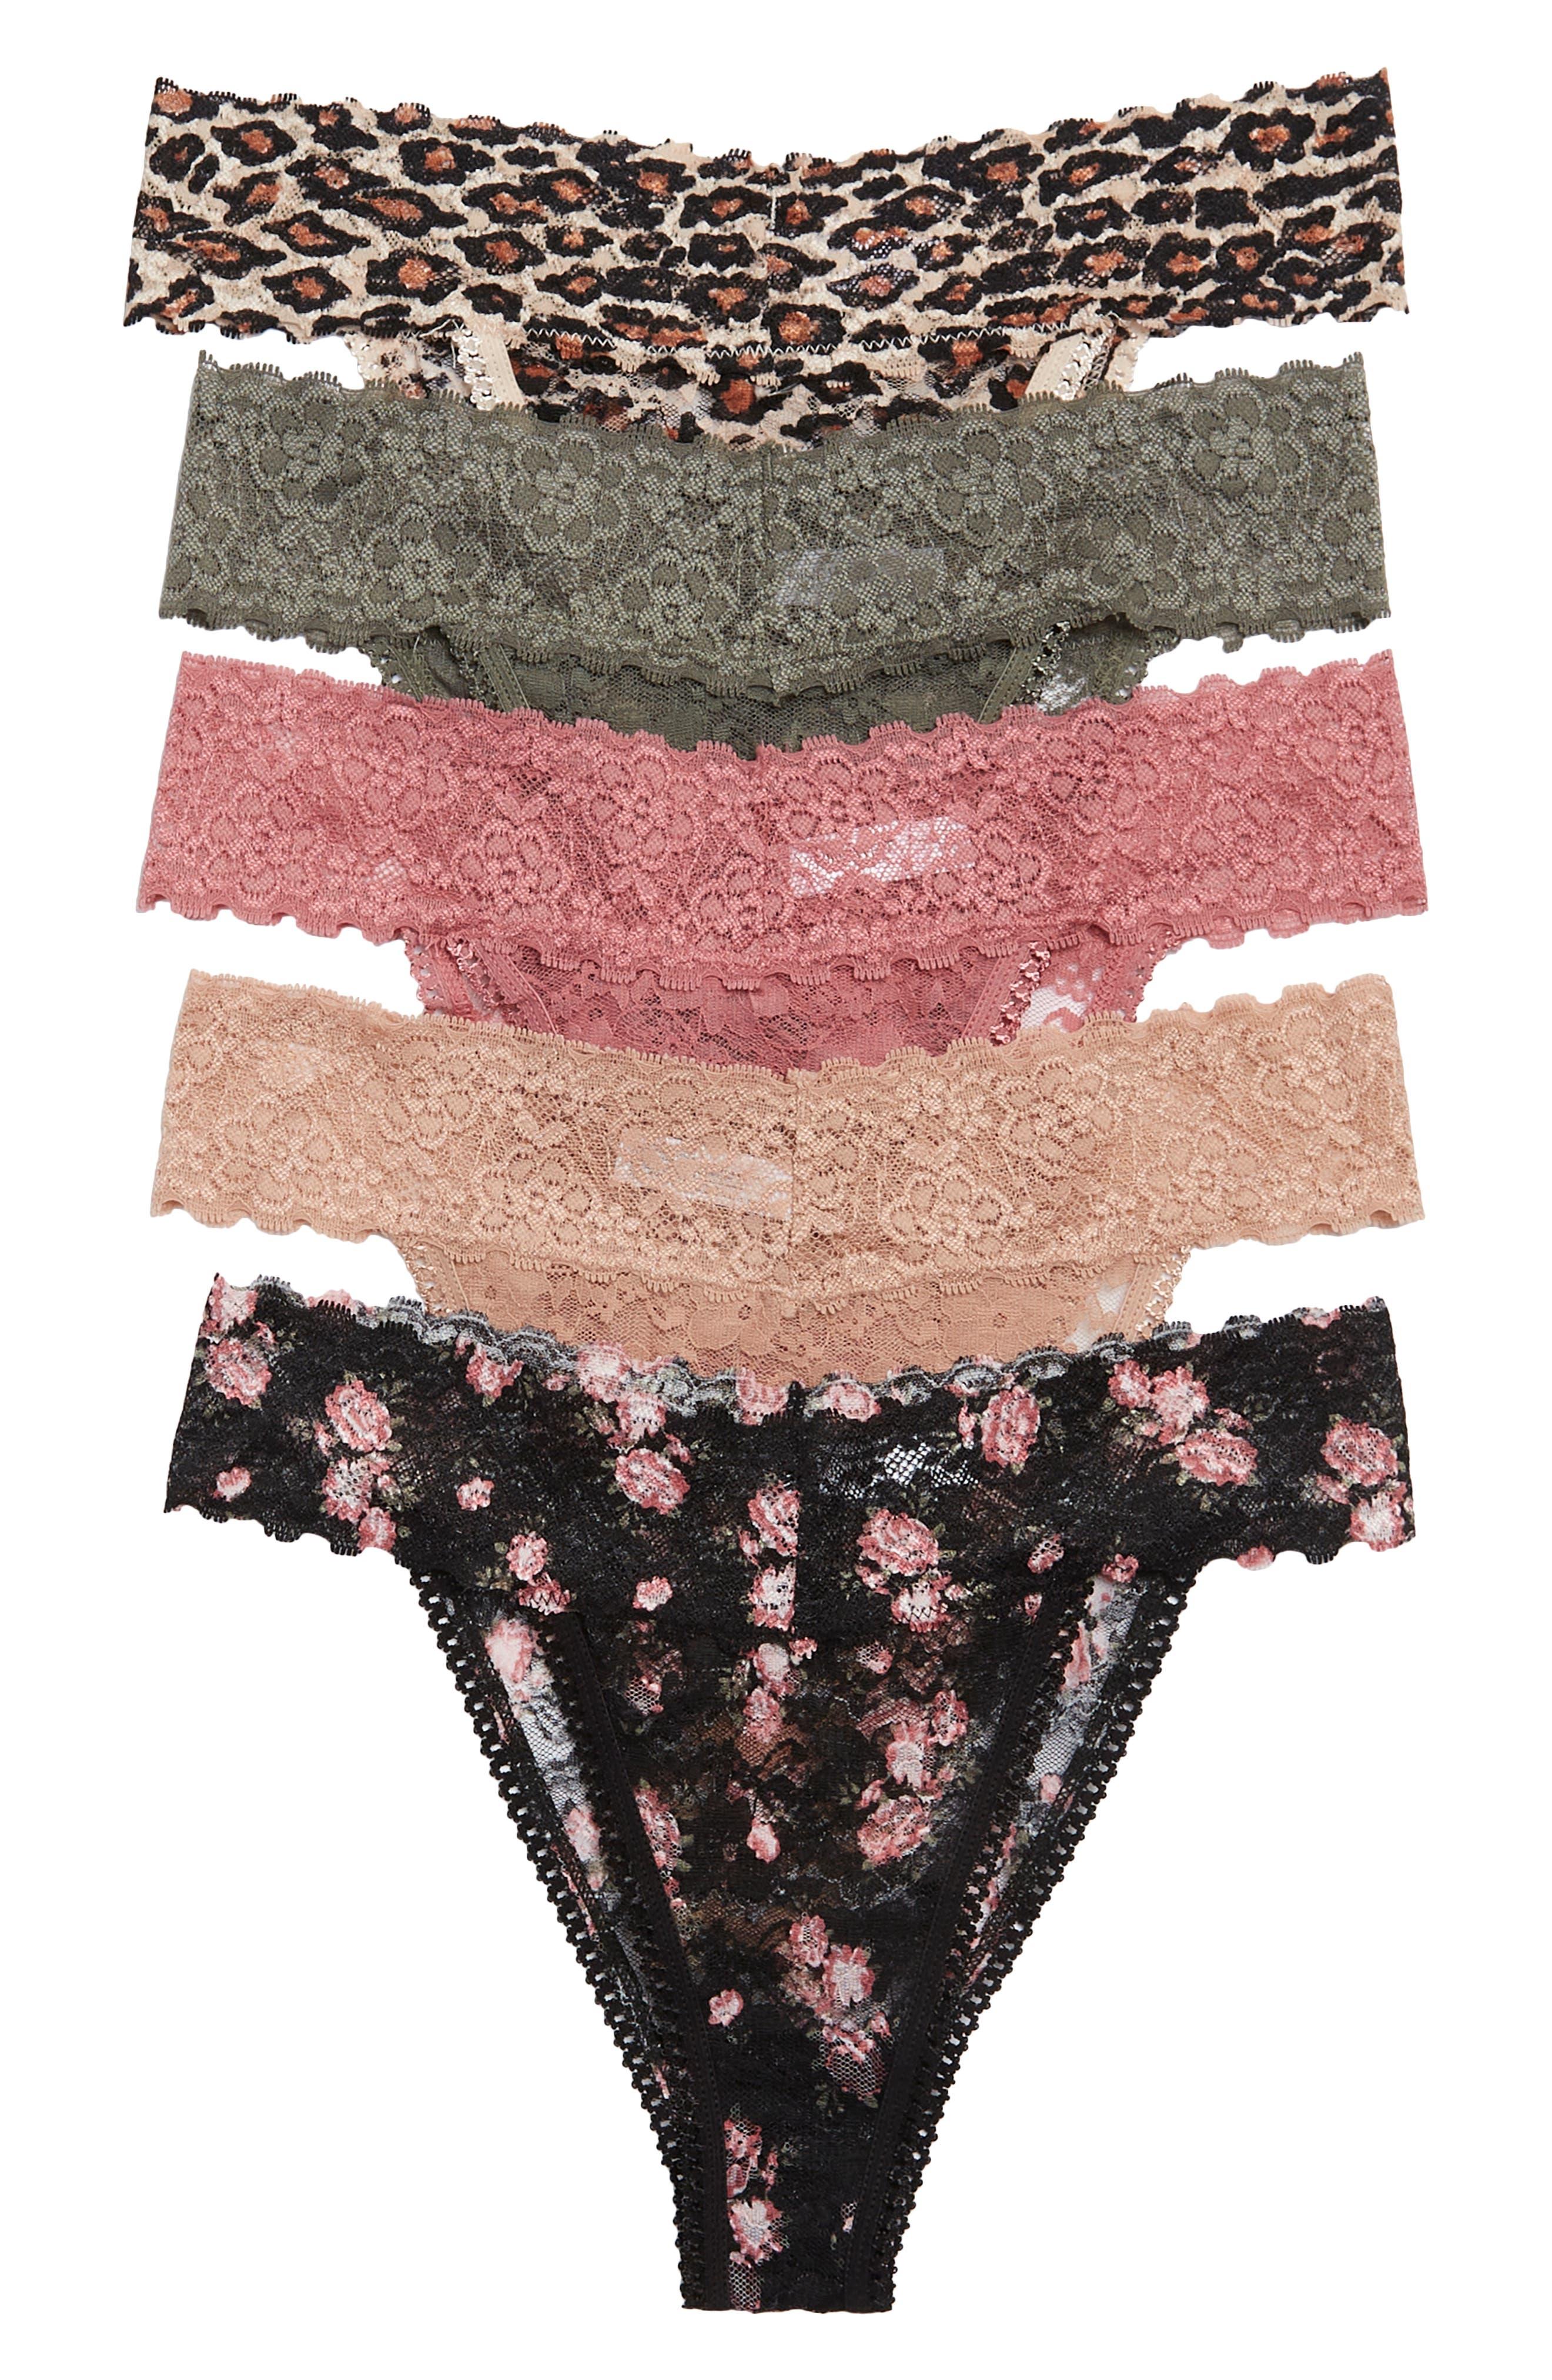 Nine West Assorted Lace Tanga Cheeky Underwear